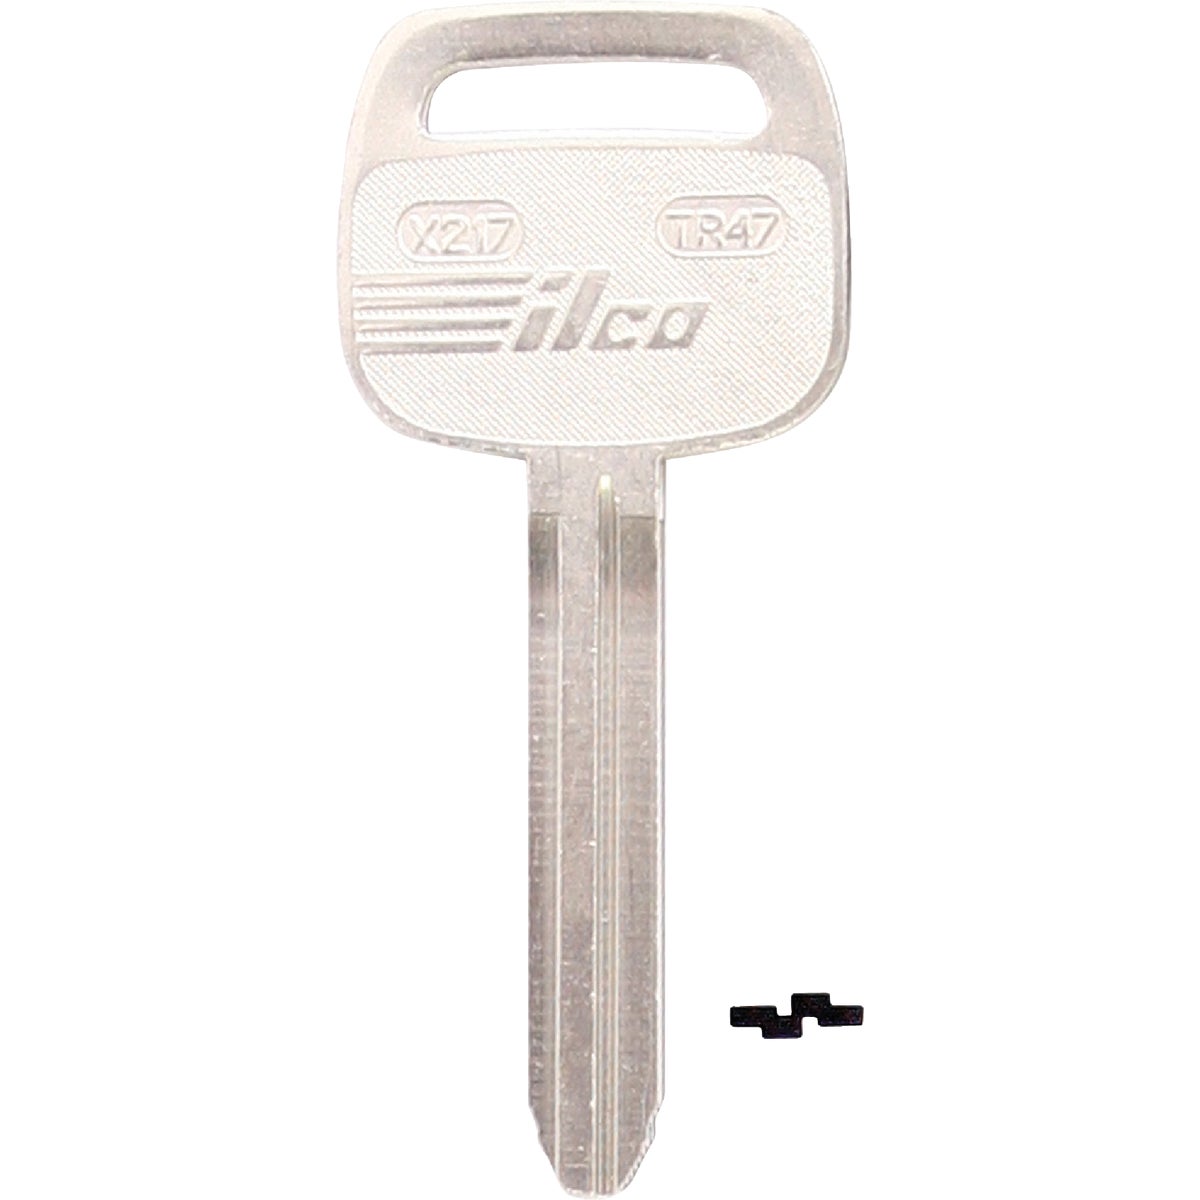 ILCO Toyota Nickel Plated Automotive Key, TR47 / X217 (10-Pack)